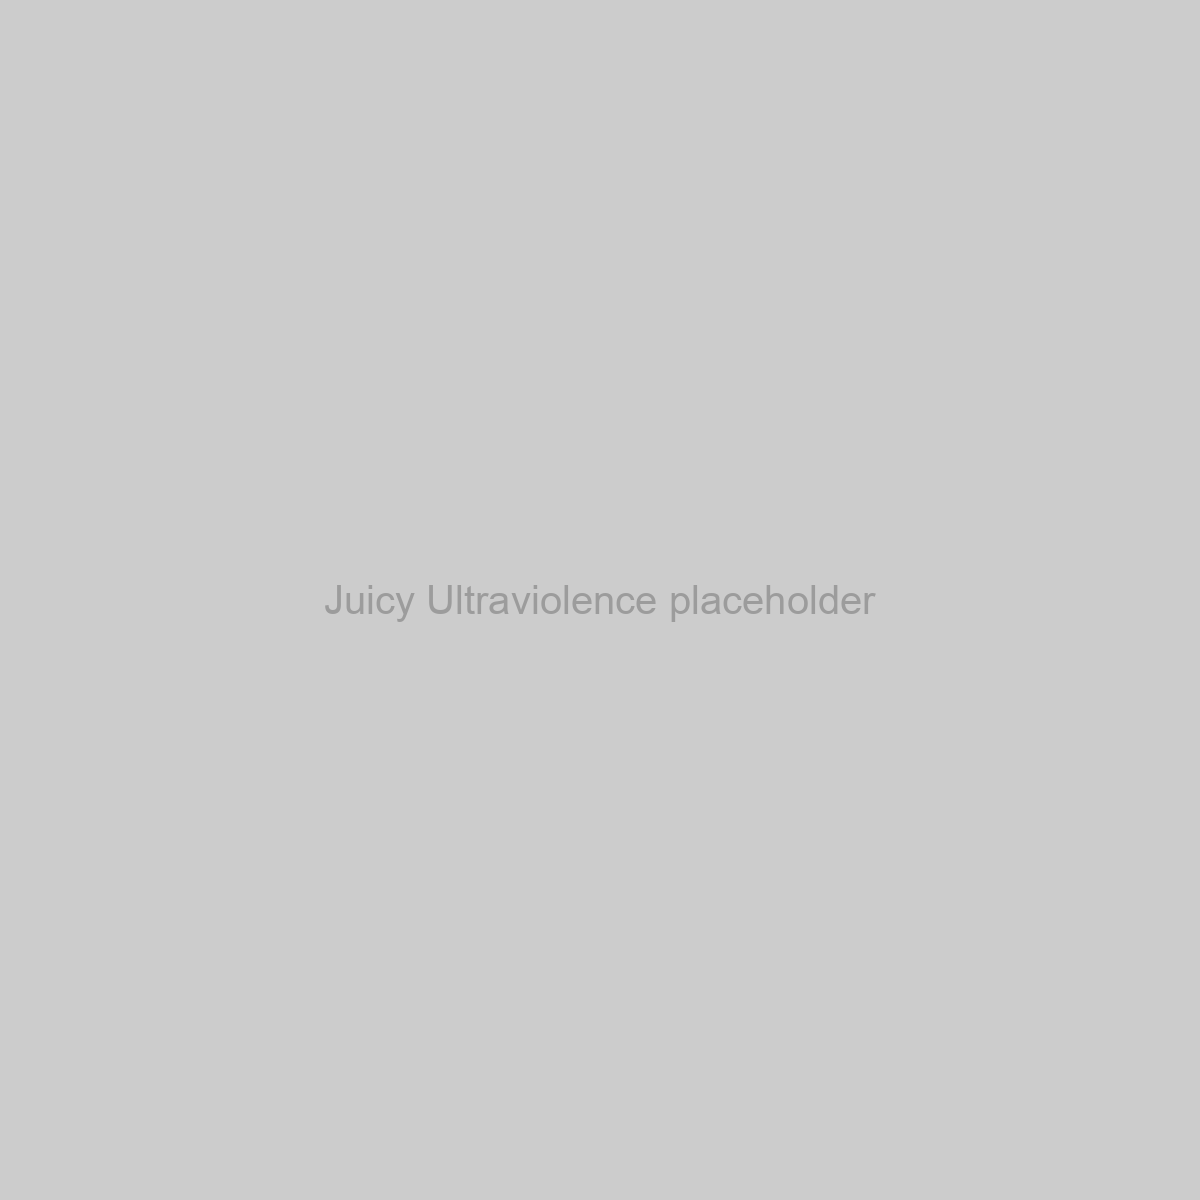 Juicy Ultraviolence Placeholder Image